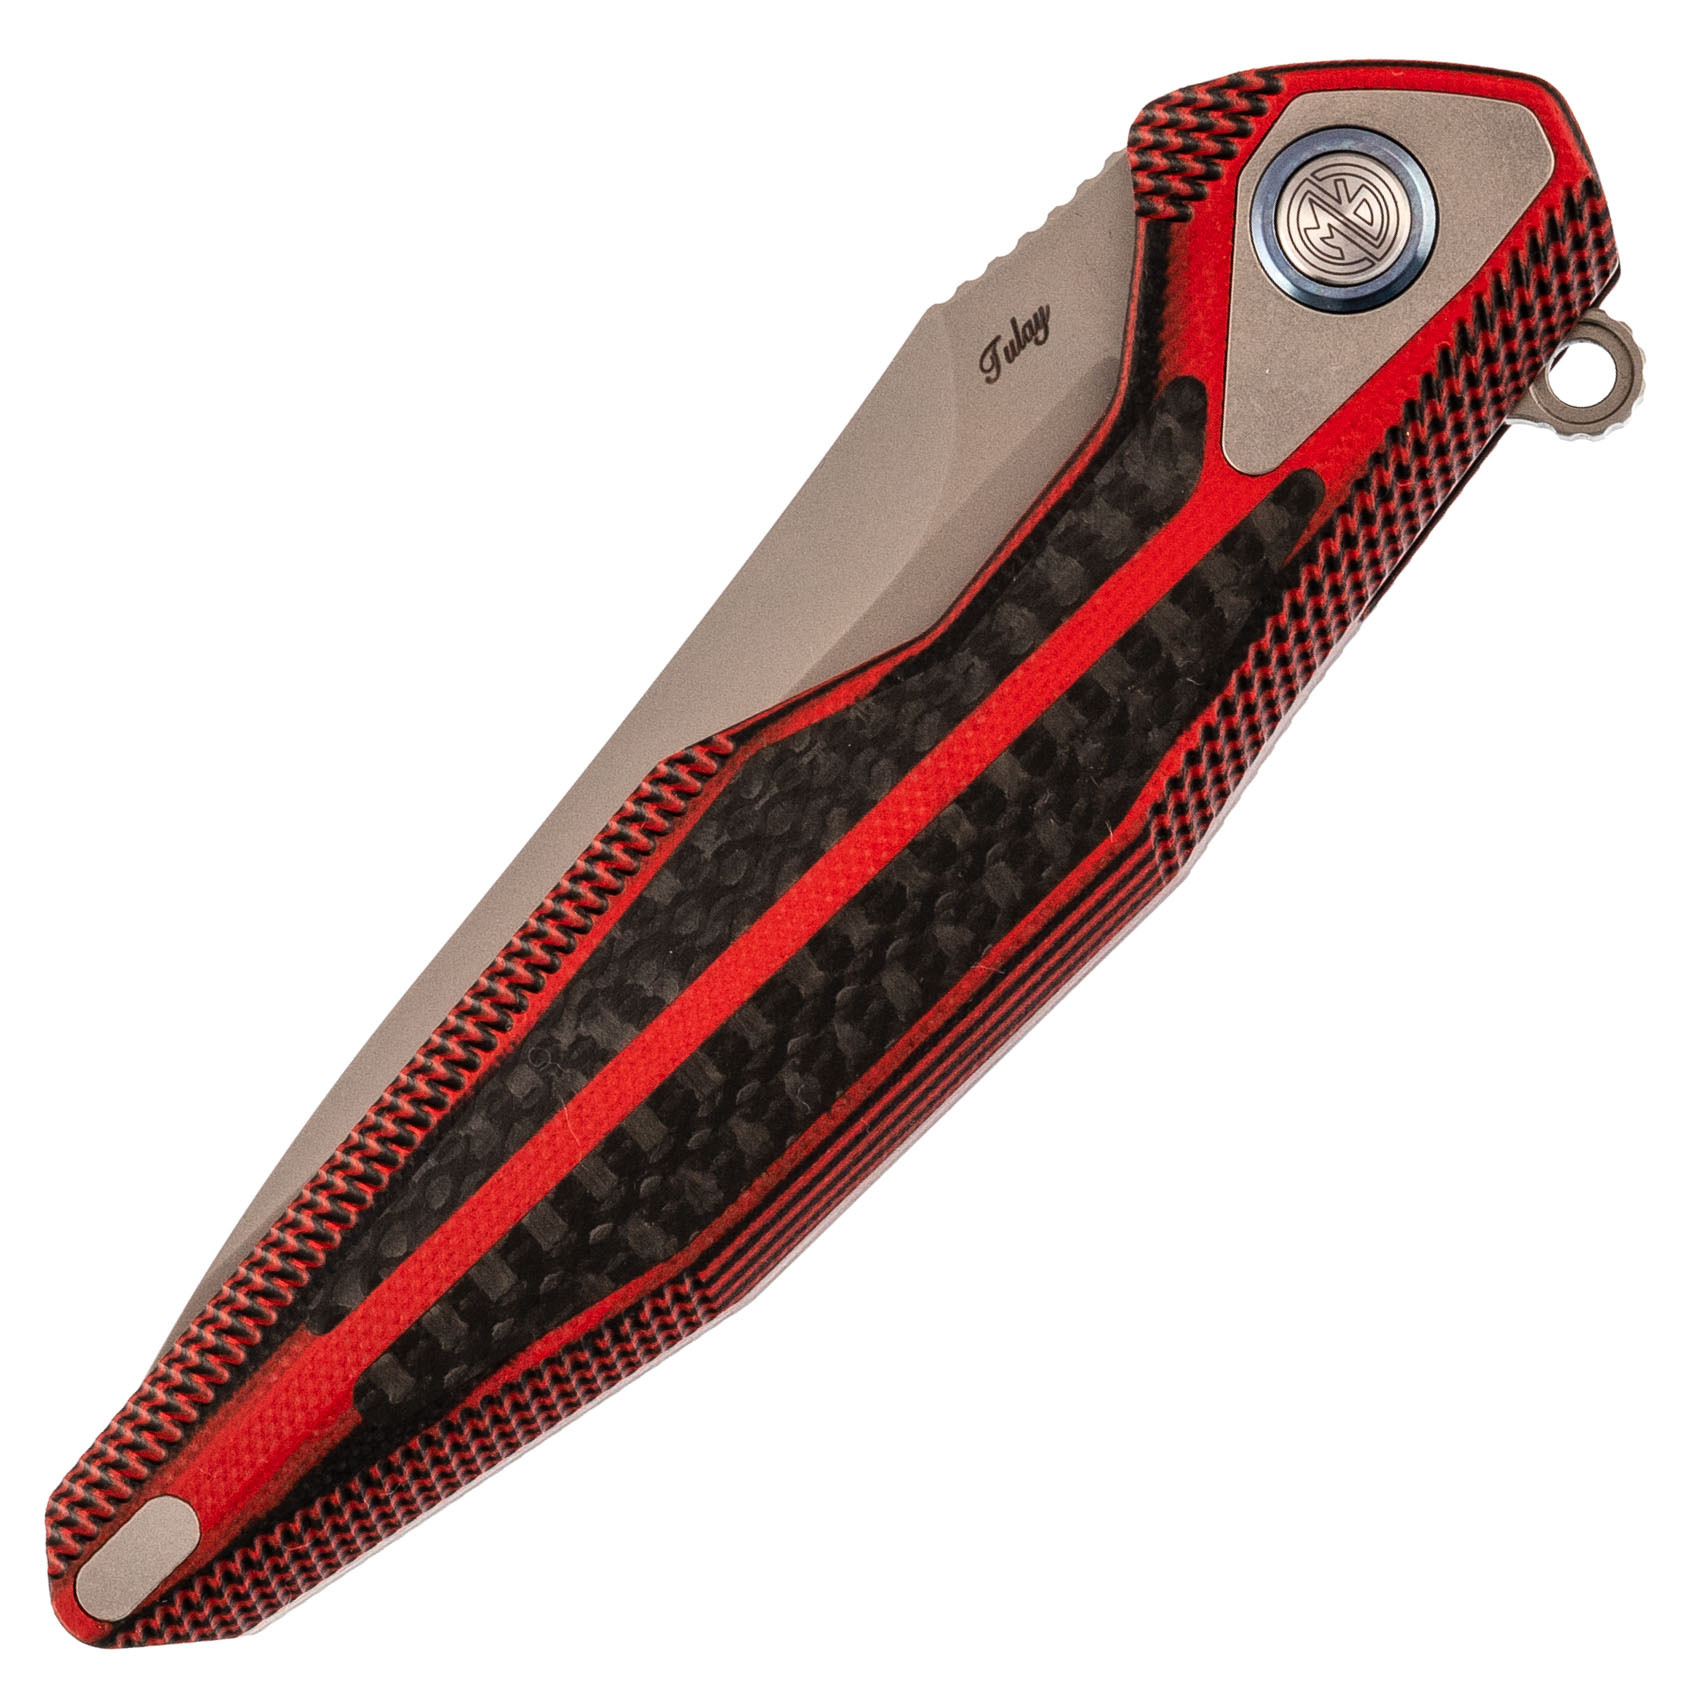 Нож складной Tulay Rikeknife, сталь 154CM, Red G10/Carbon Fiber - фото 7